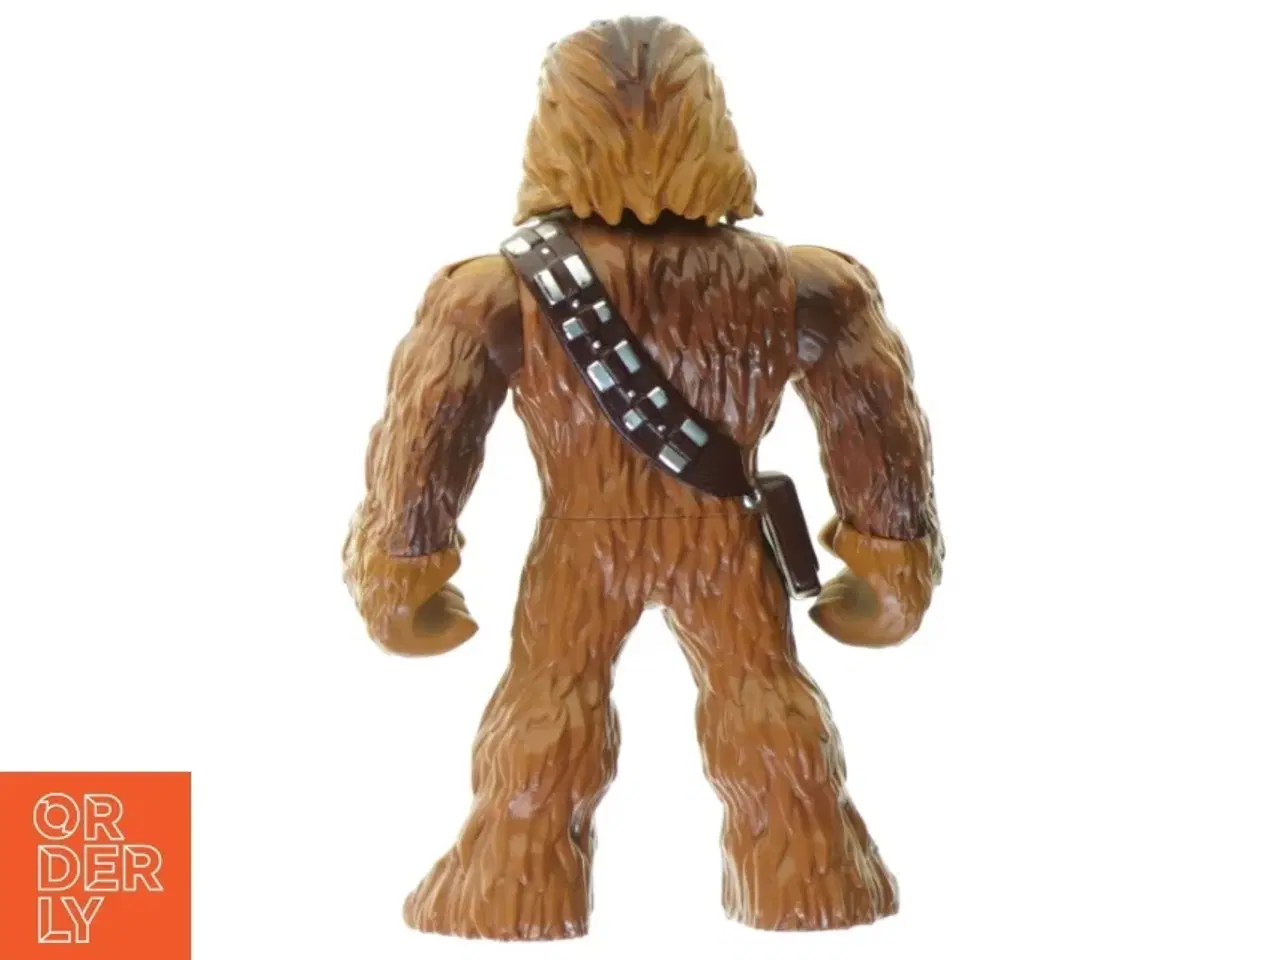 Billede 2 - Chewbacca star wars figur fra Hasbro (str. 26 x 16 cm)